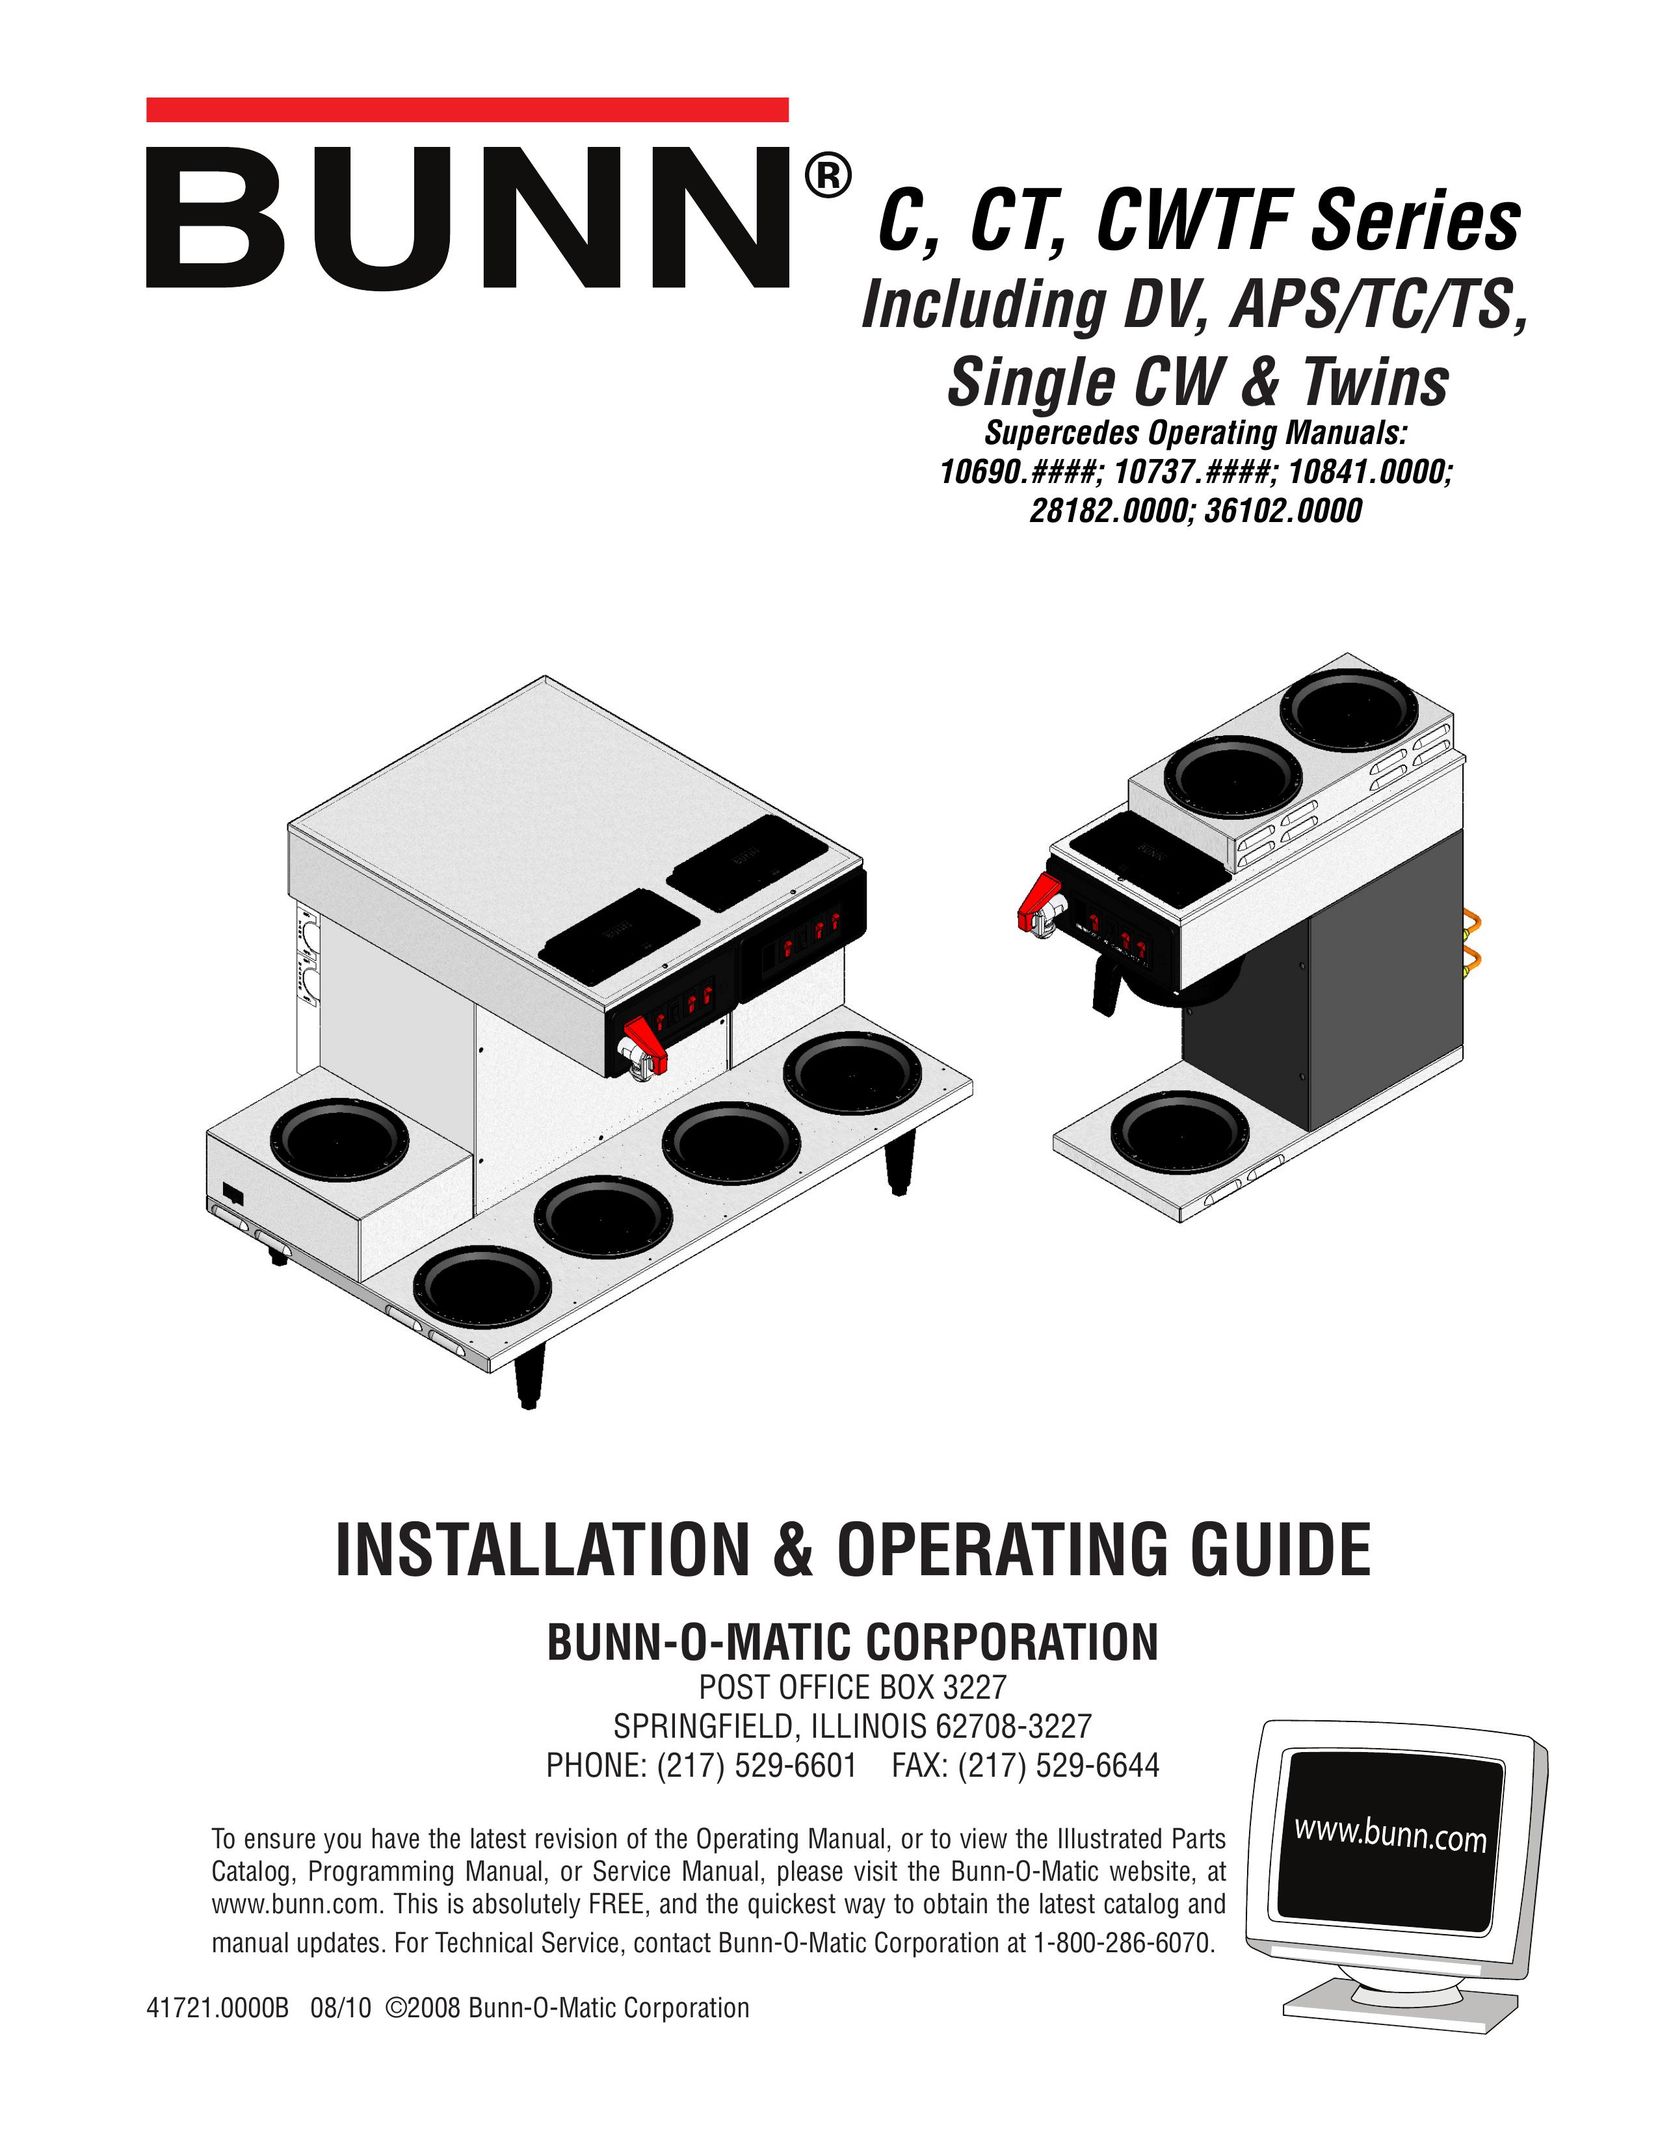 Bunn CT Computer Accessories User Manual